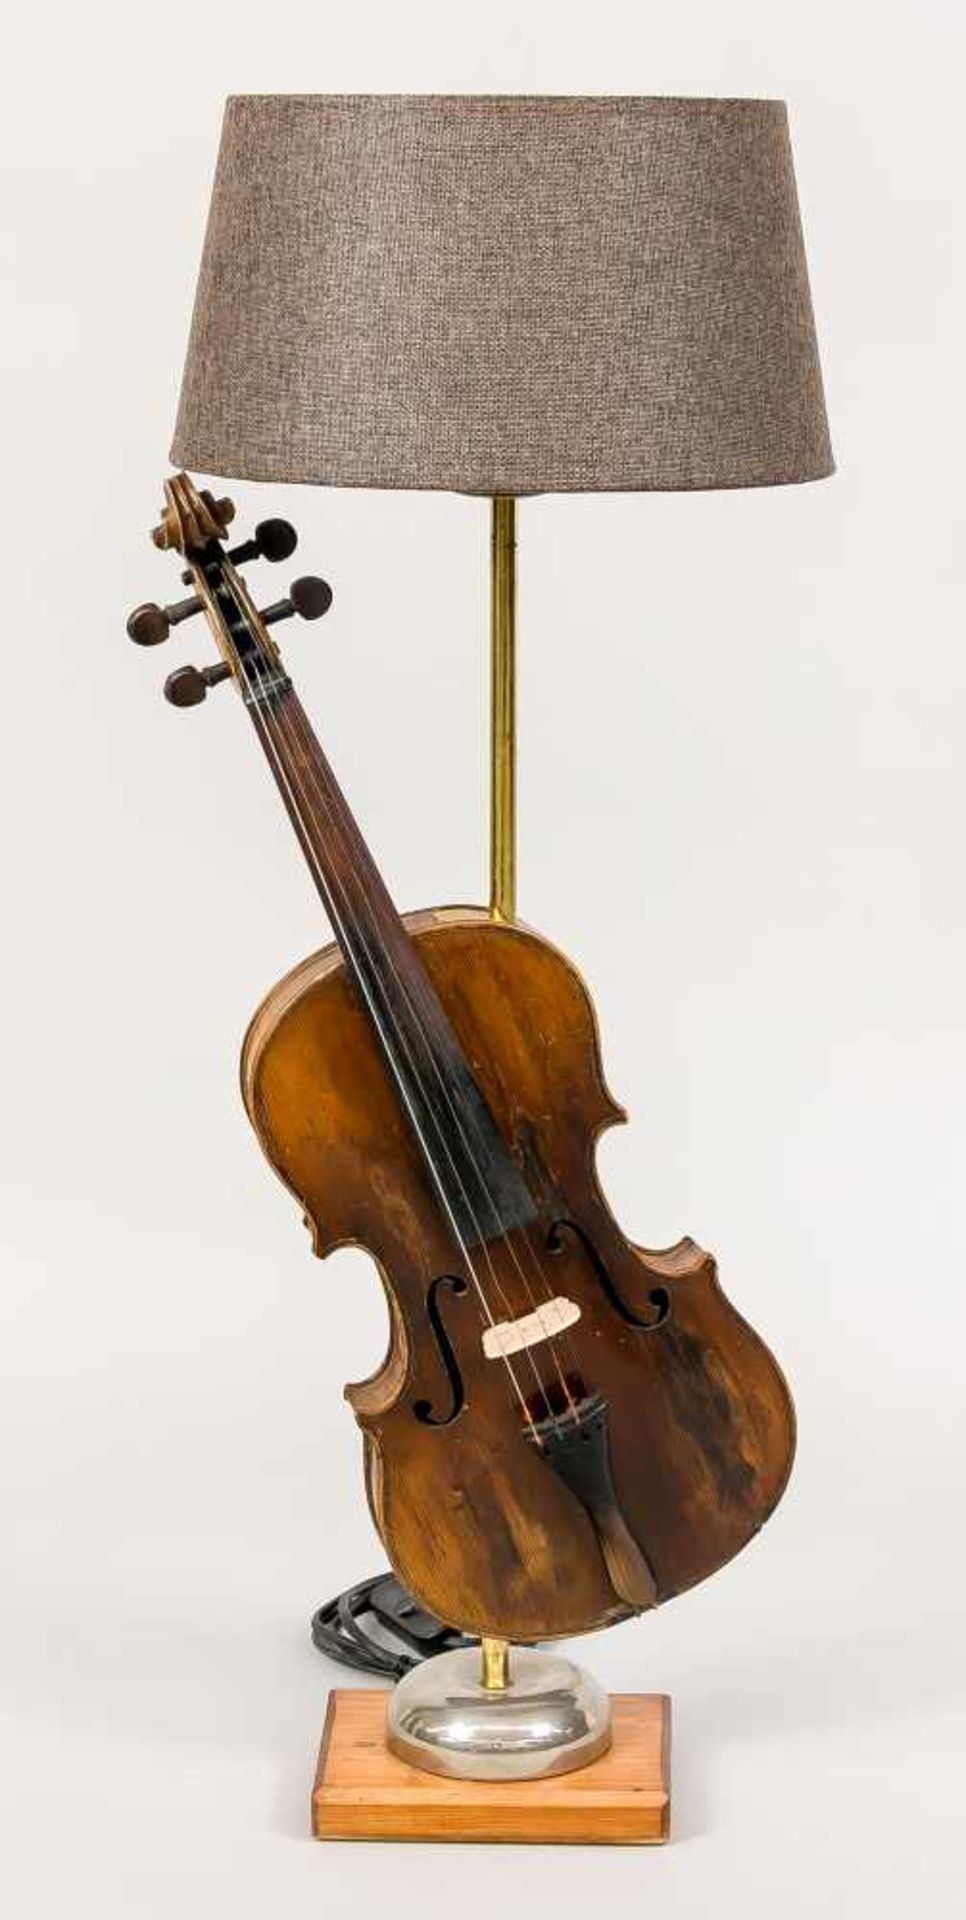 Geigen-Lampe, 20. Jh. (Mariage). Holzsockel mit verchromter Basis. Die Geige